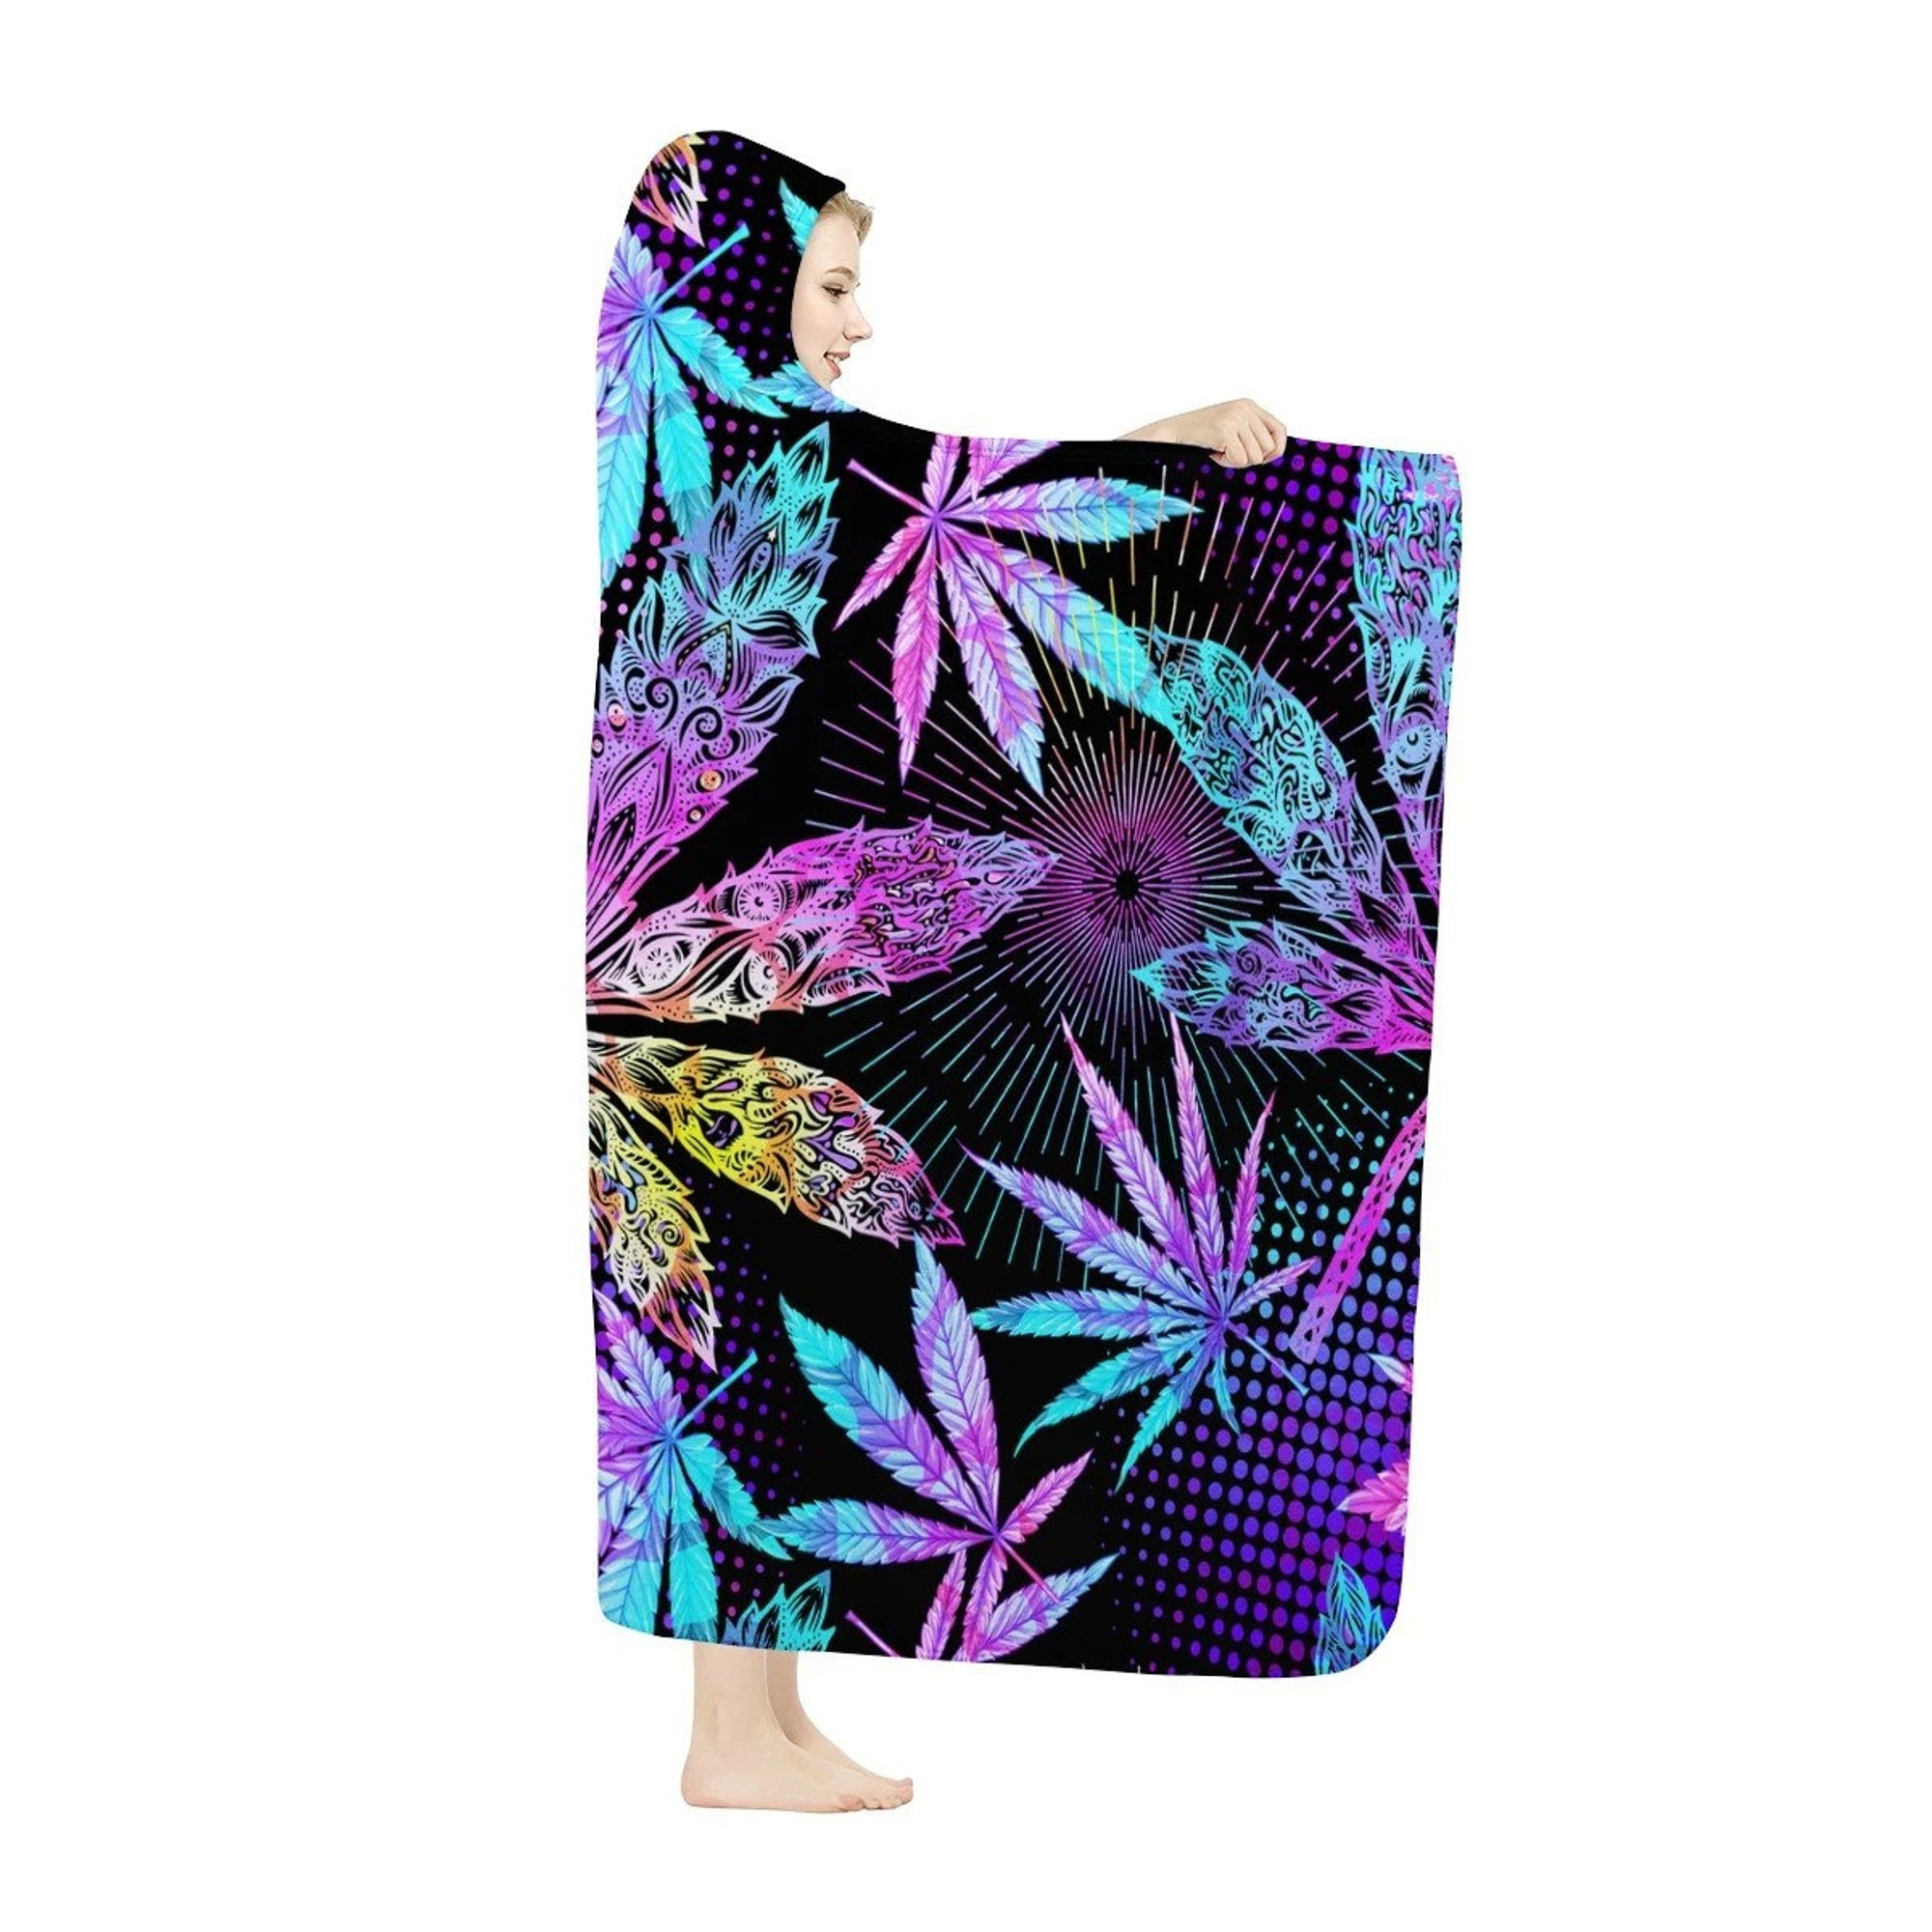 Trippy Cannabis Hooded Blanket